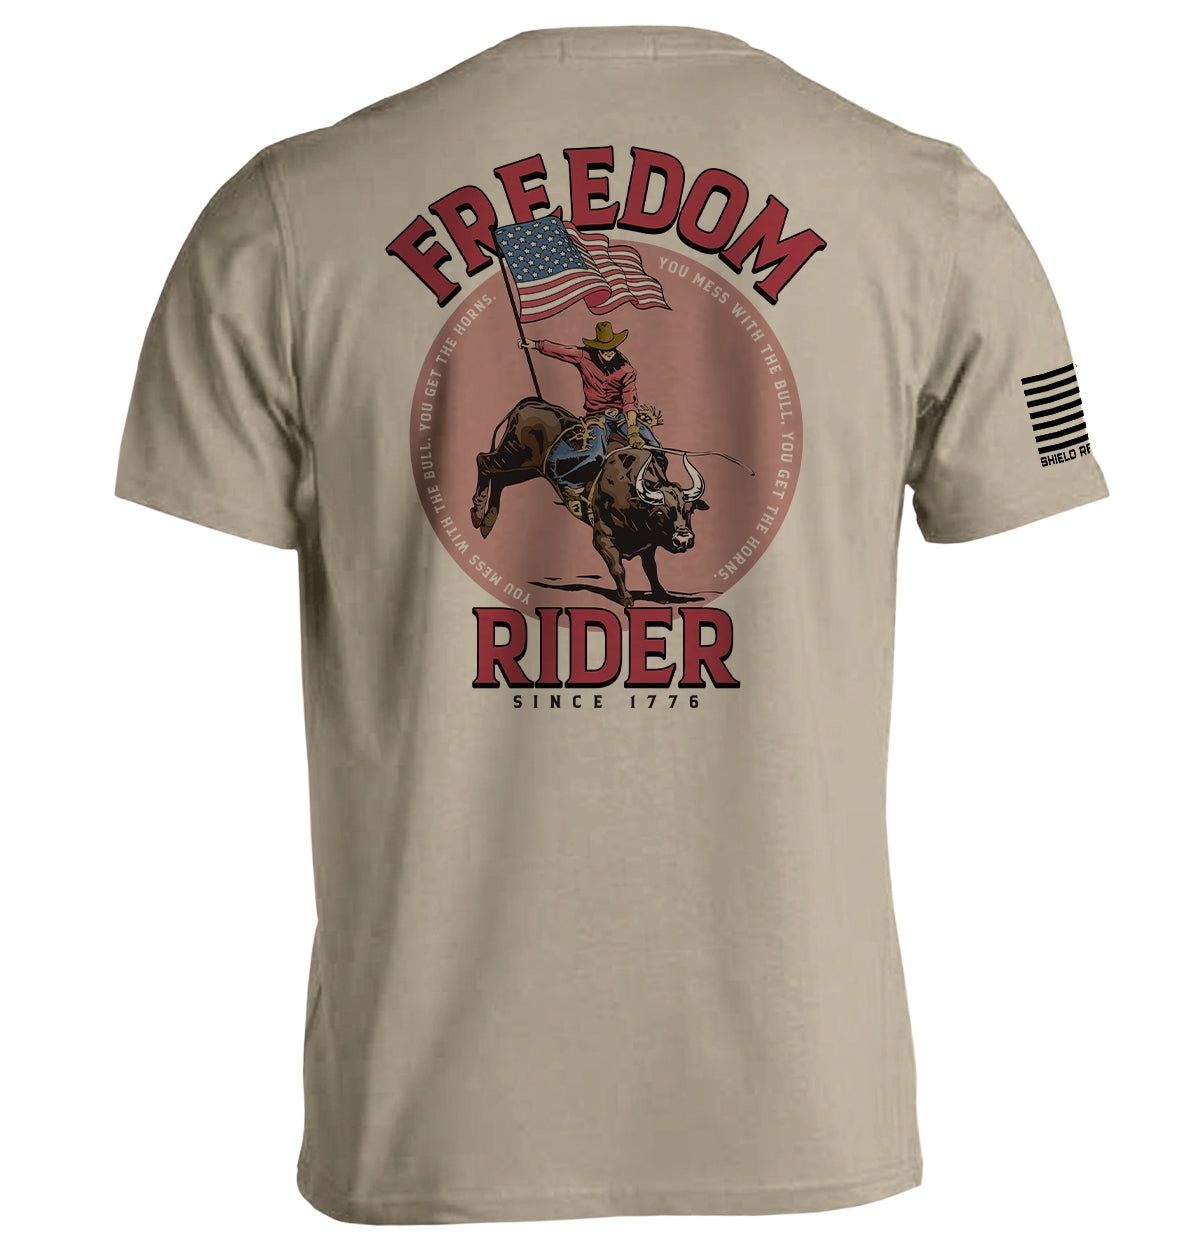 Freedom Rider 1776